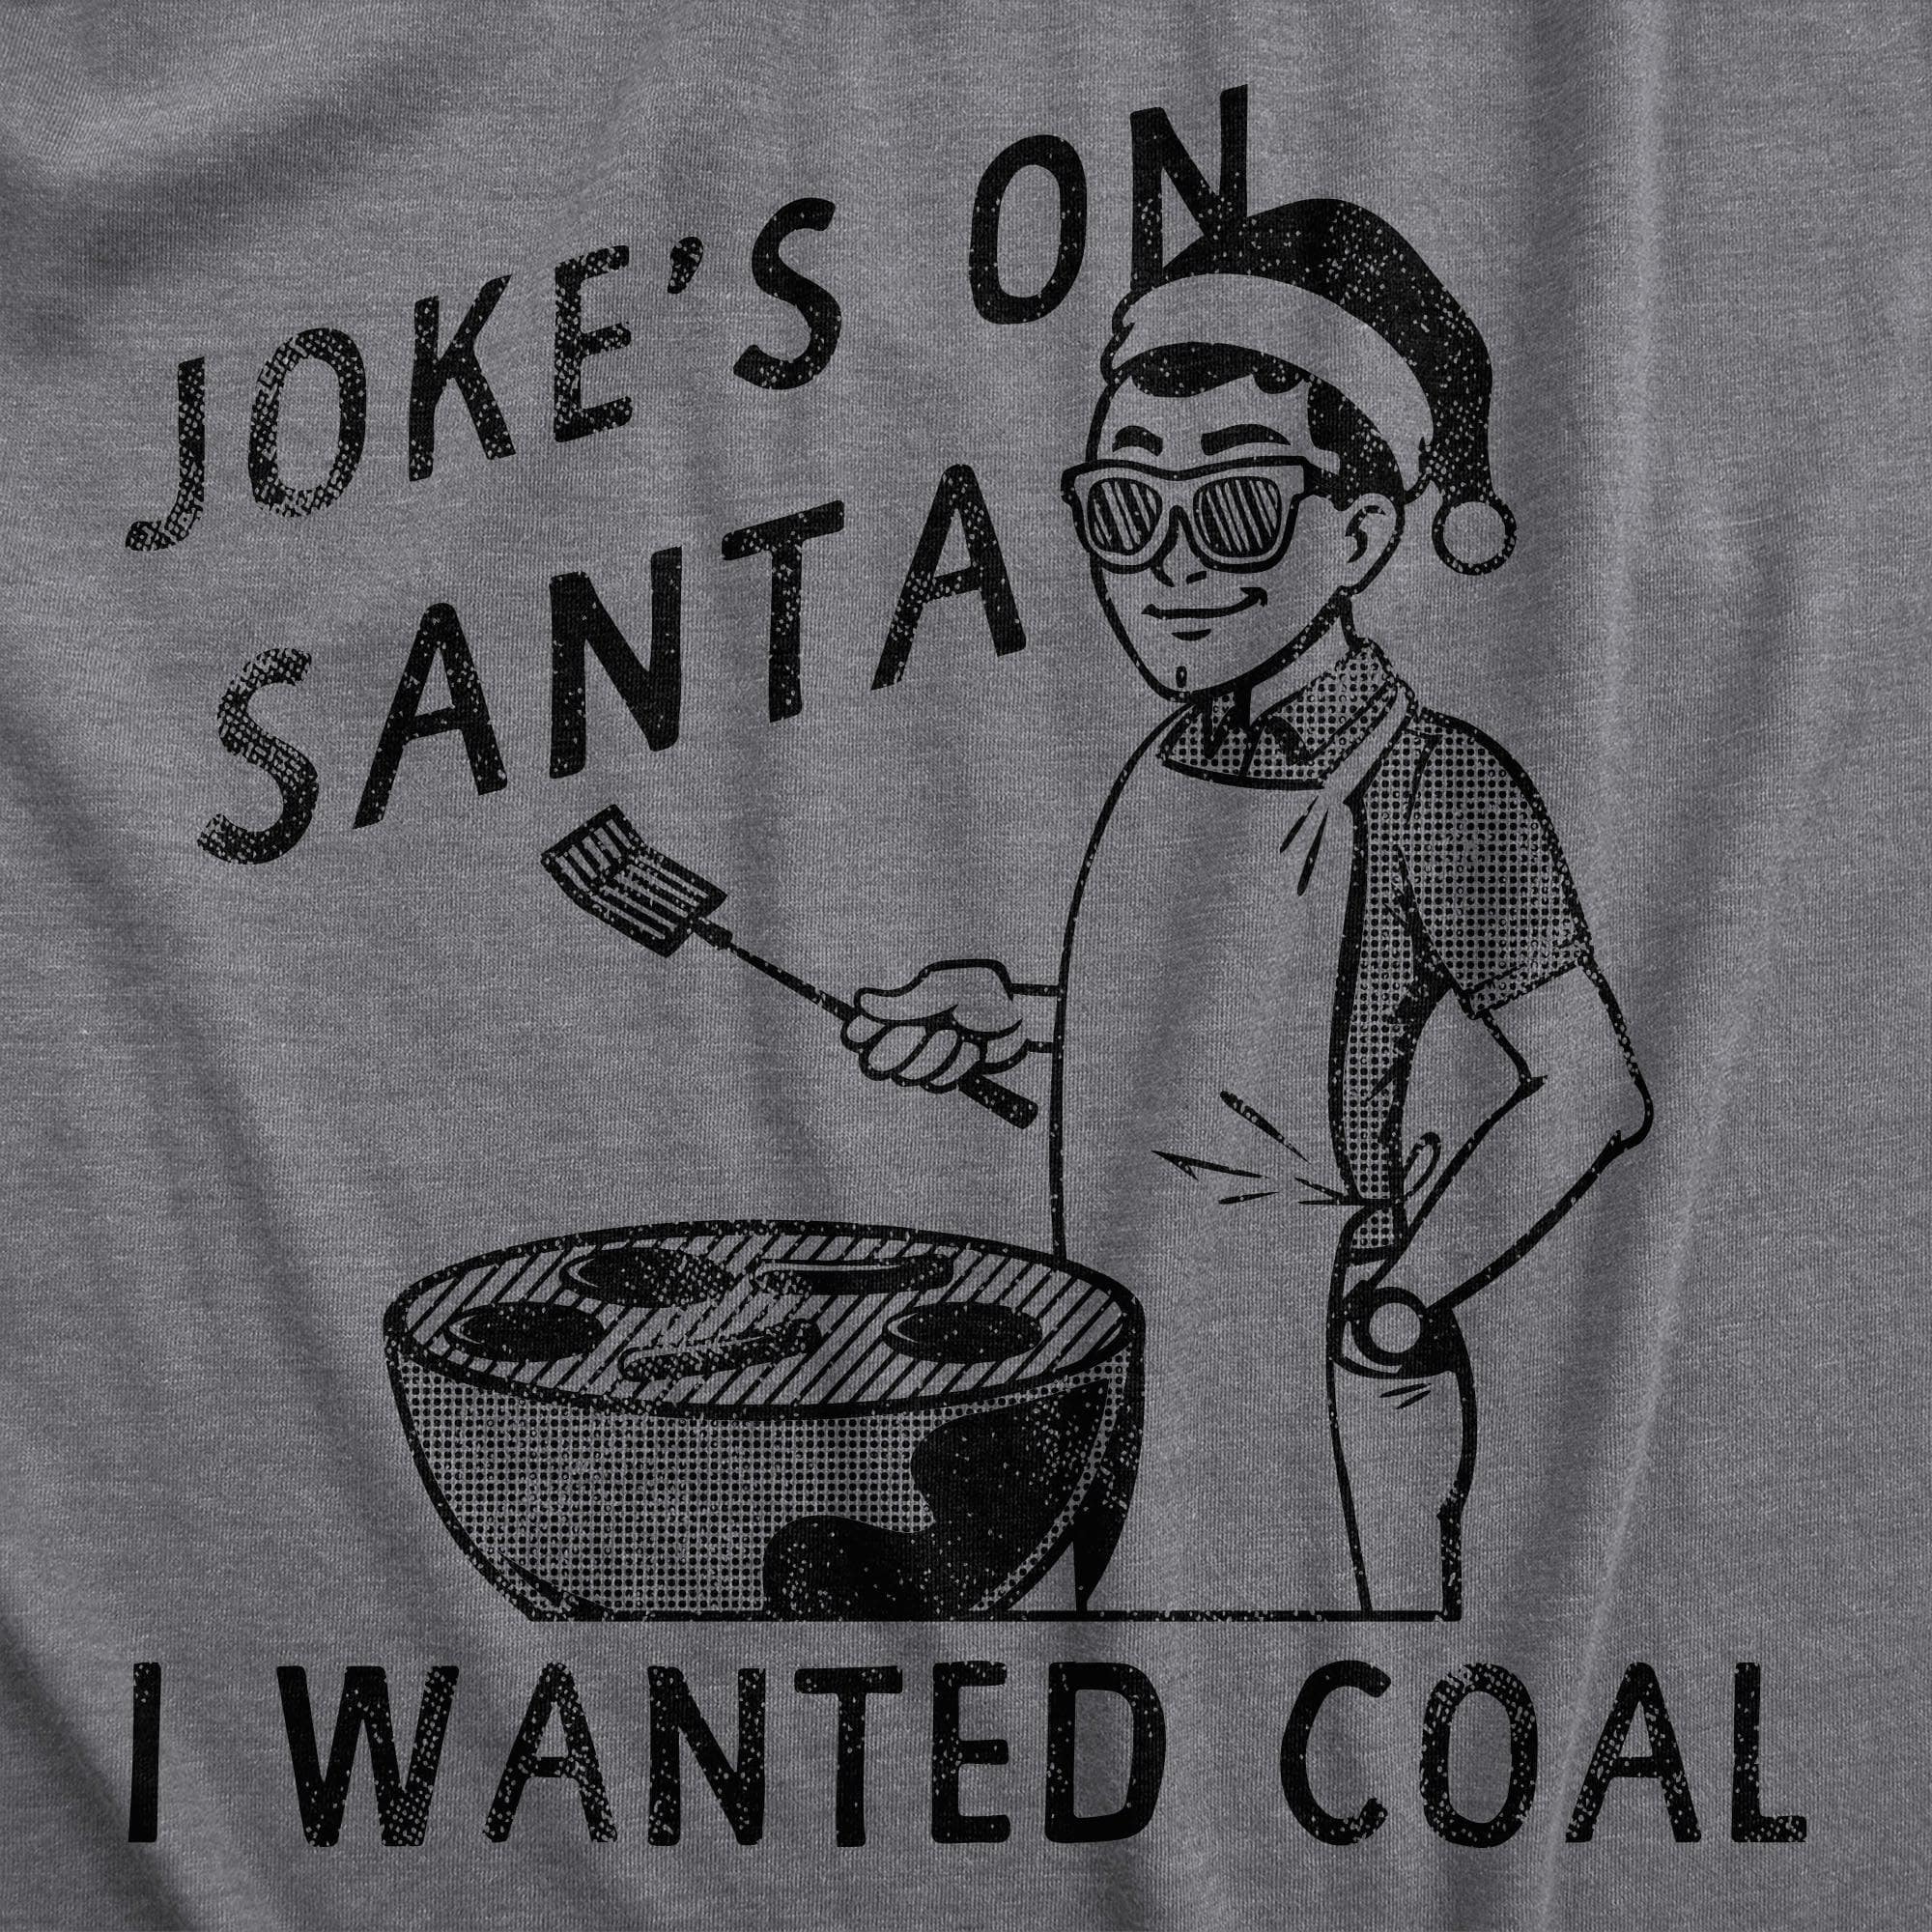 Jokes On Santa I Wanted Coal Men's Tshirt  -  Crazy Dog T-Shirts